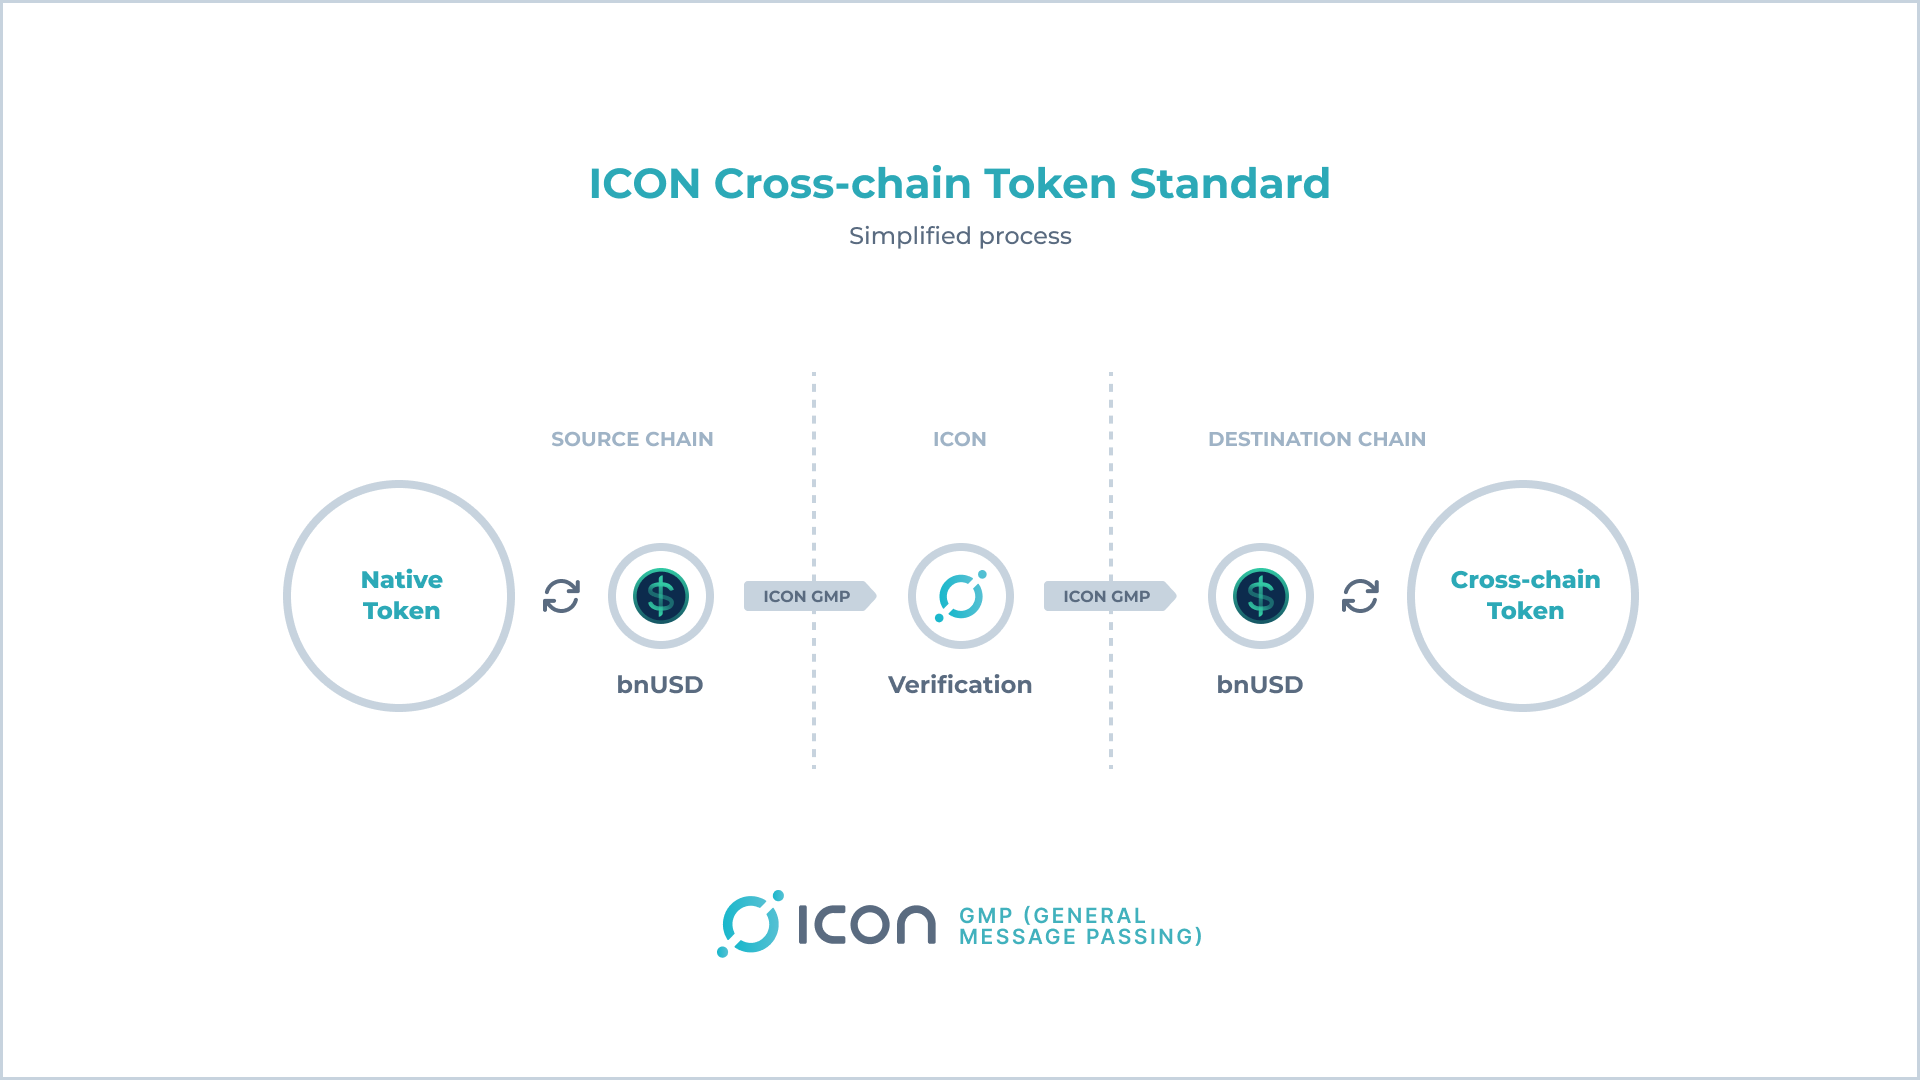 ICON Cross-chain Token Standard